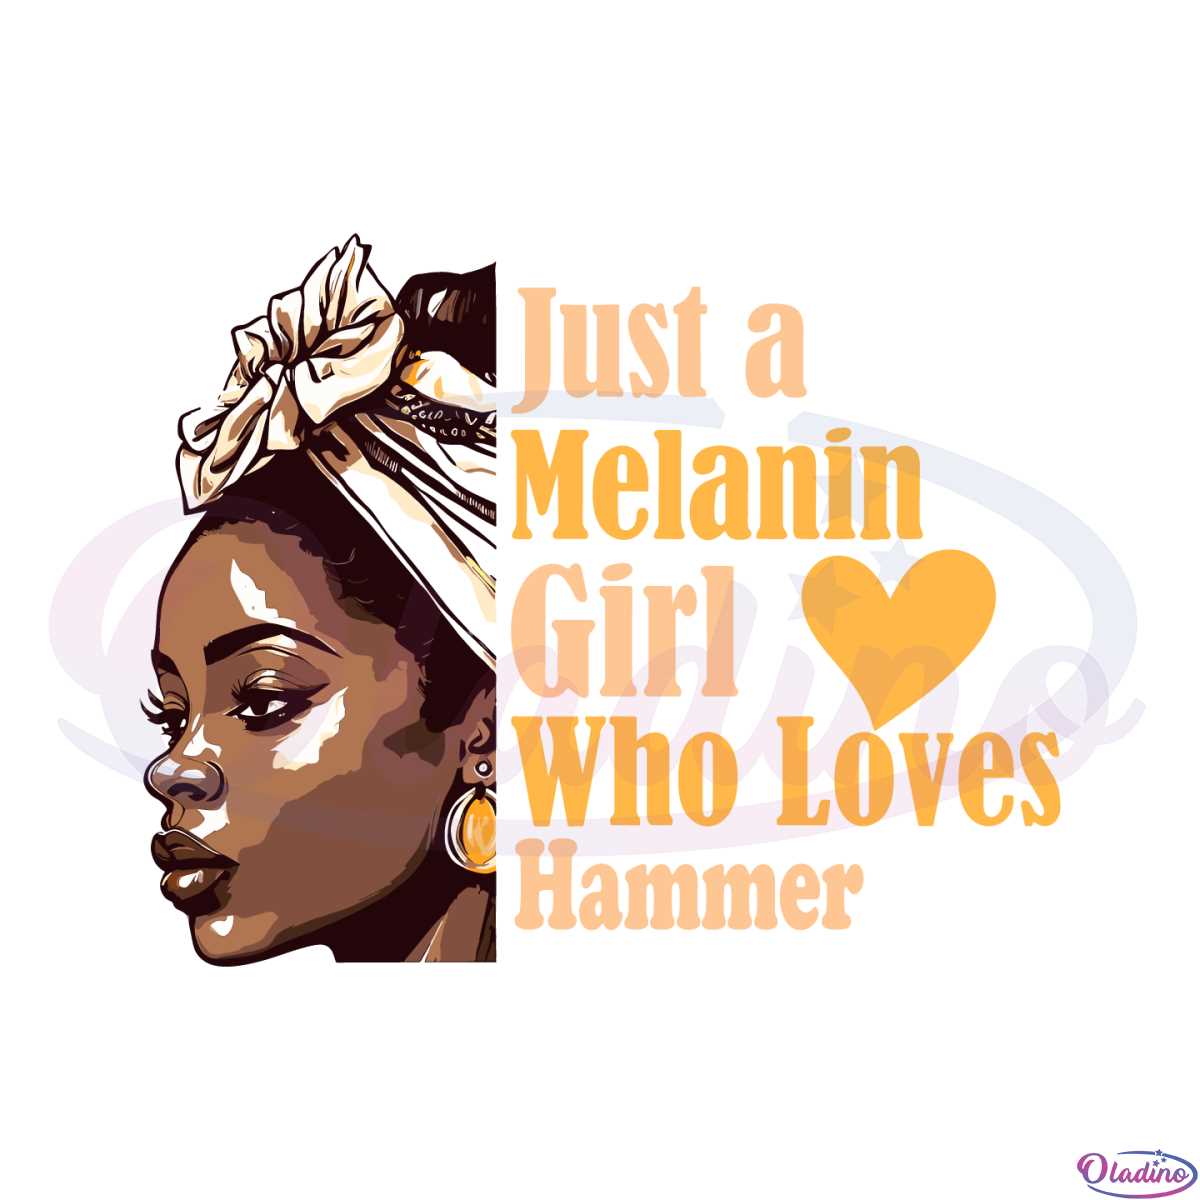 just-a-melanin-girl-who-loves-hammer-svg-cutting-files